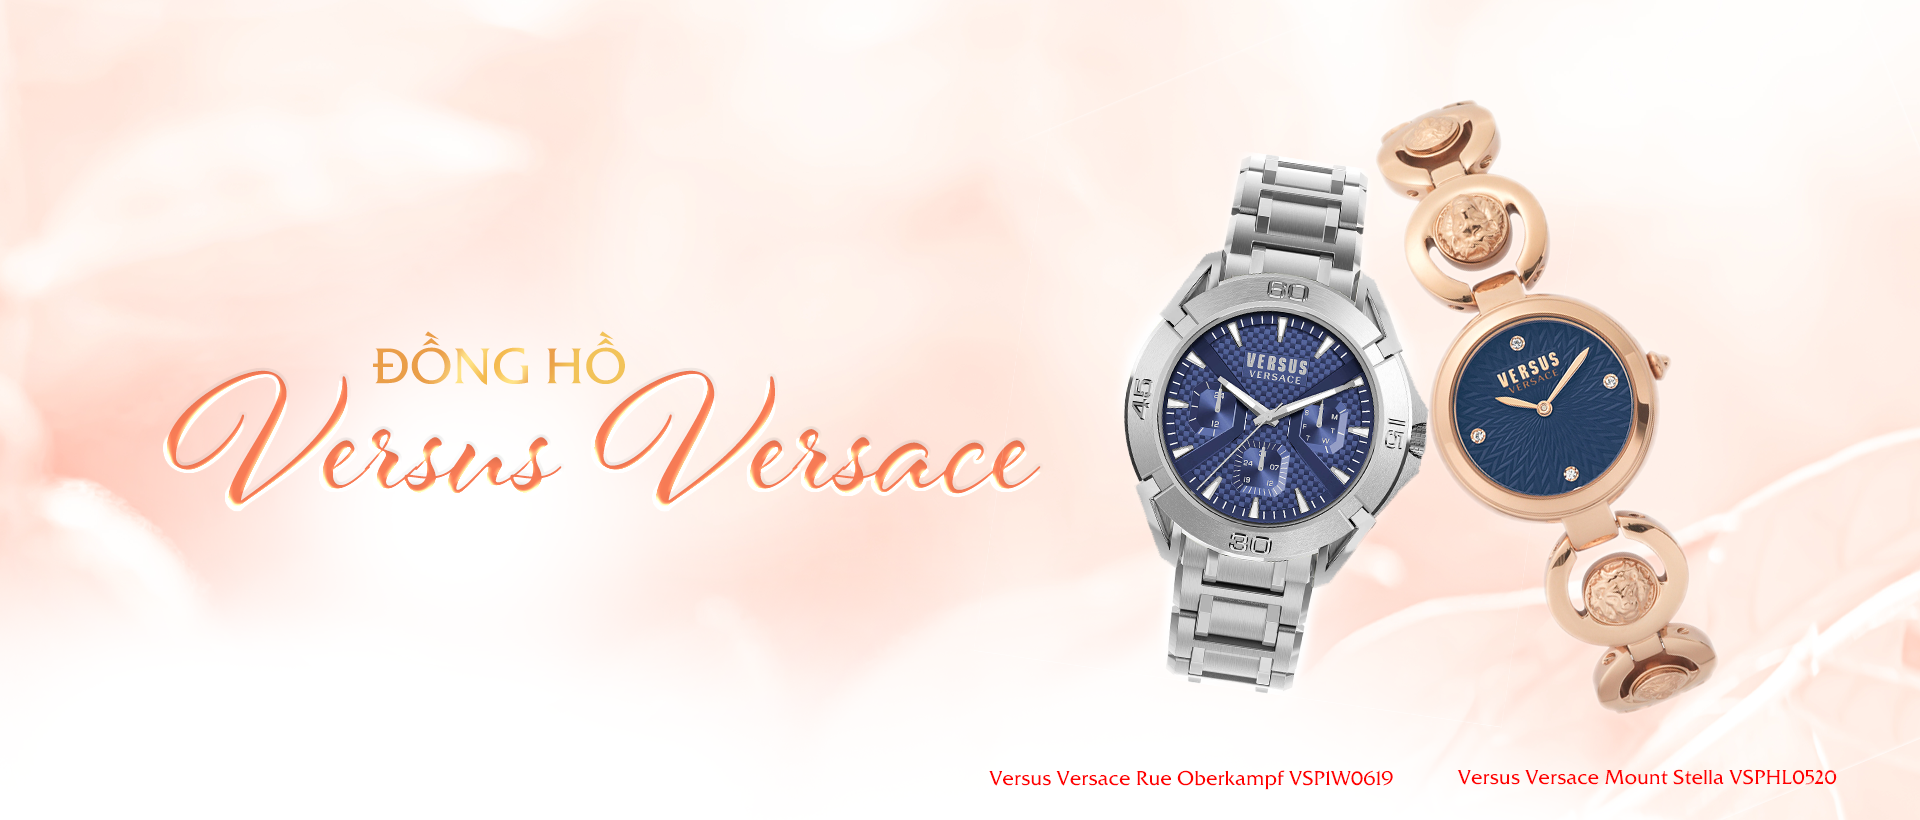 Đồng hồ Versus Versace